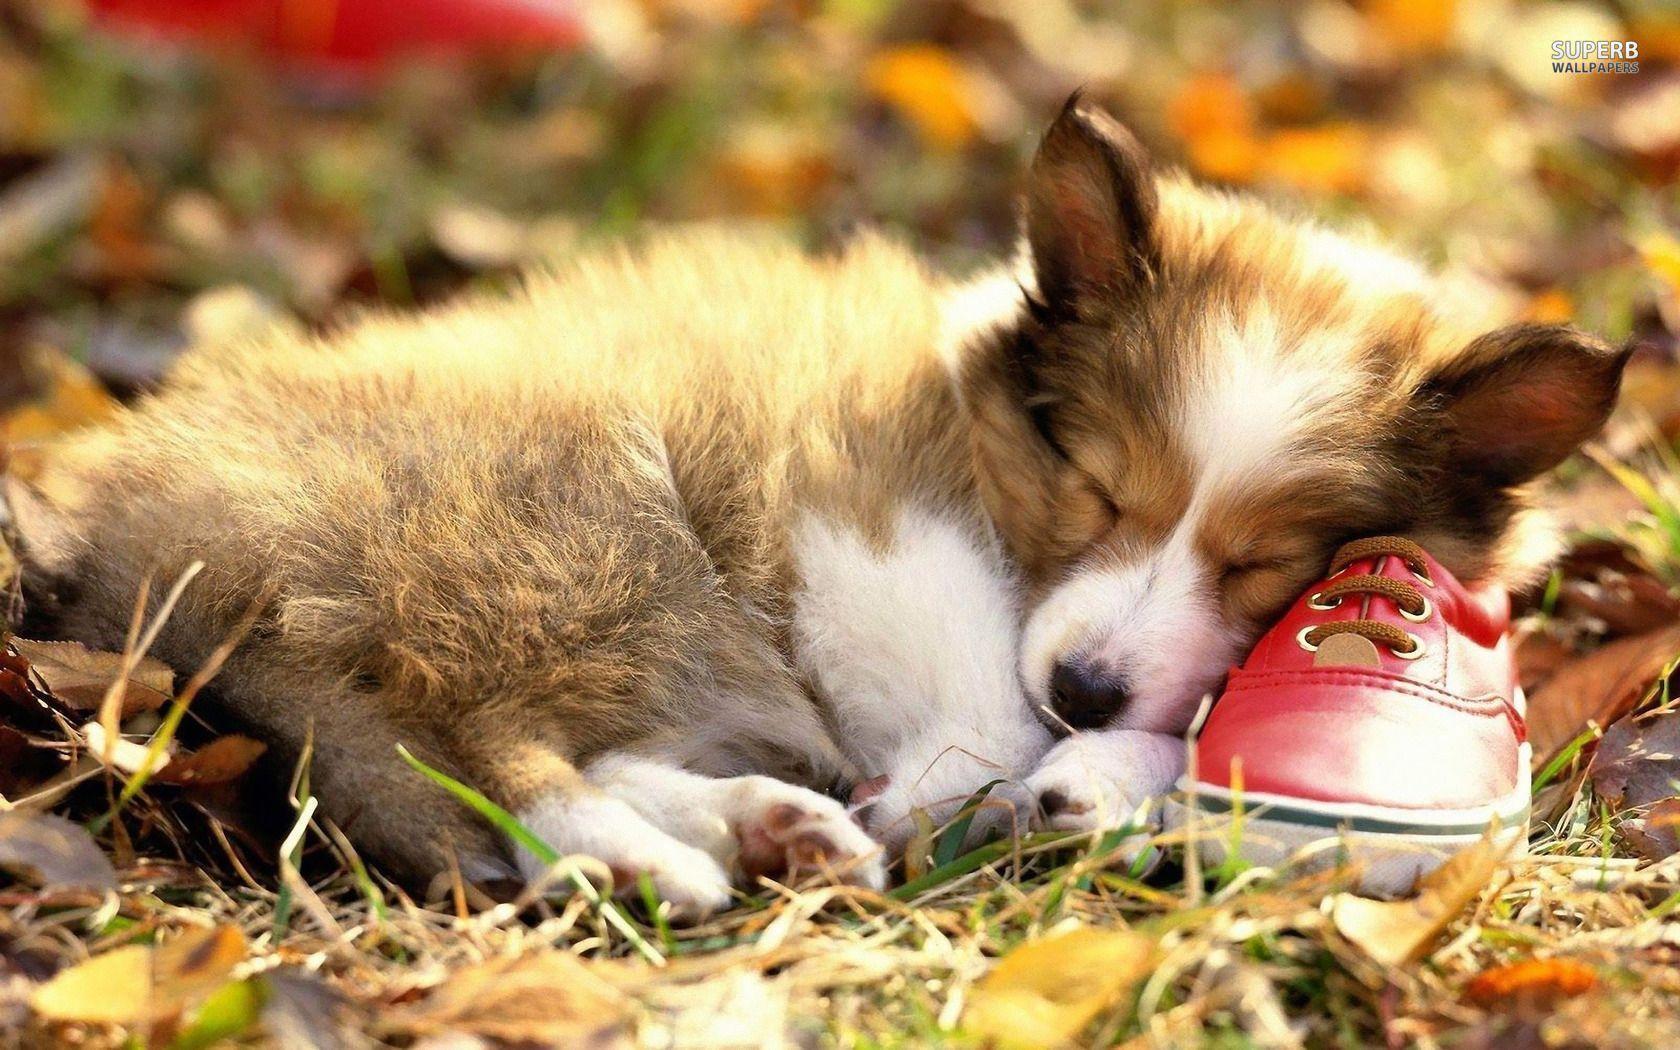 Pembroke Welsh Corgi puppy sleeping on a red shoe Wallpaper